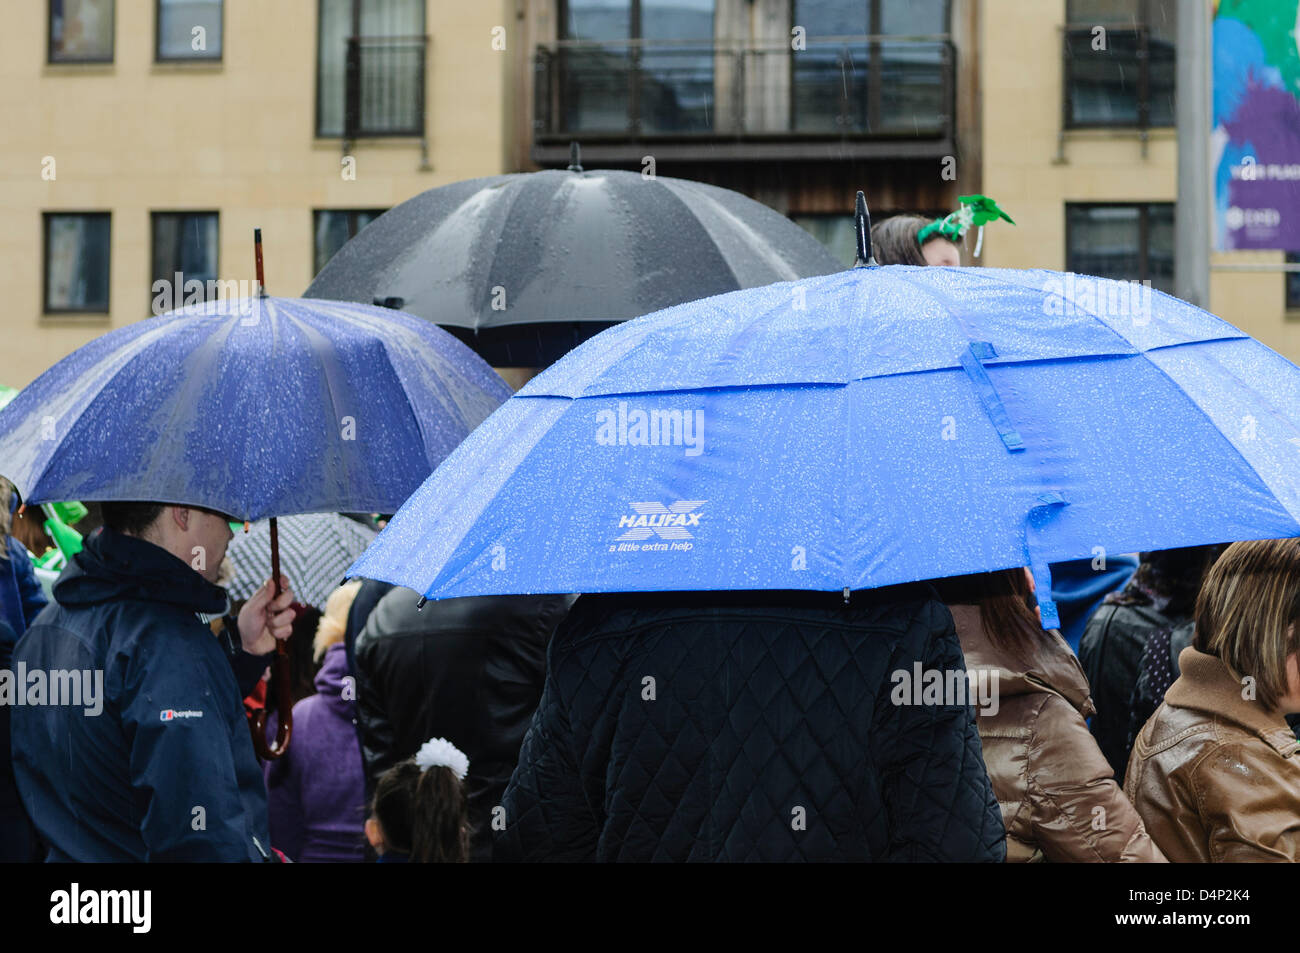 People sheltering under umbrellas in heavy rain Stock Photo